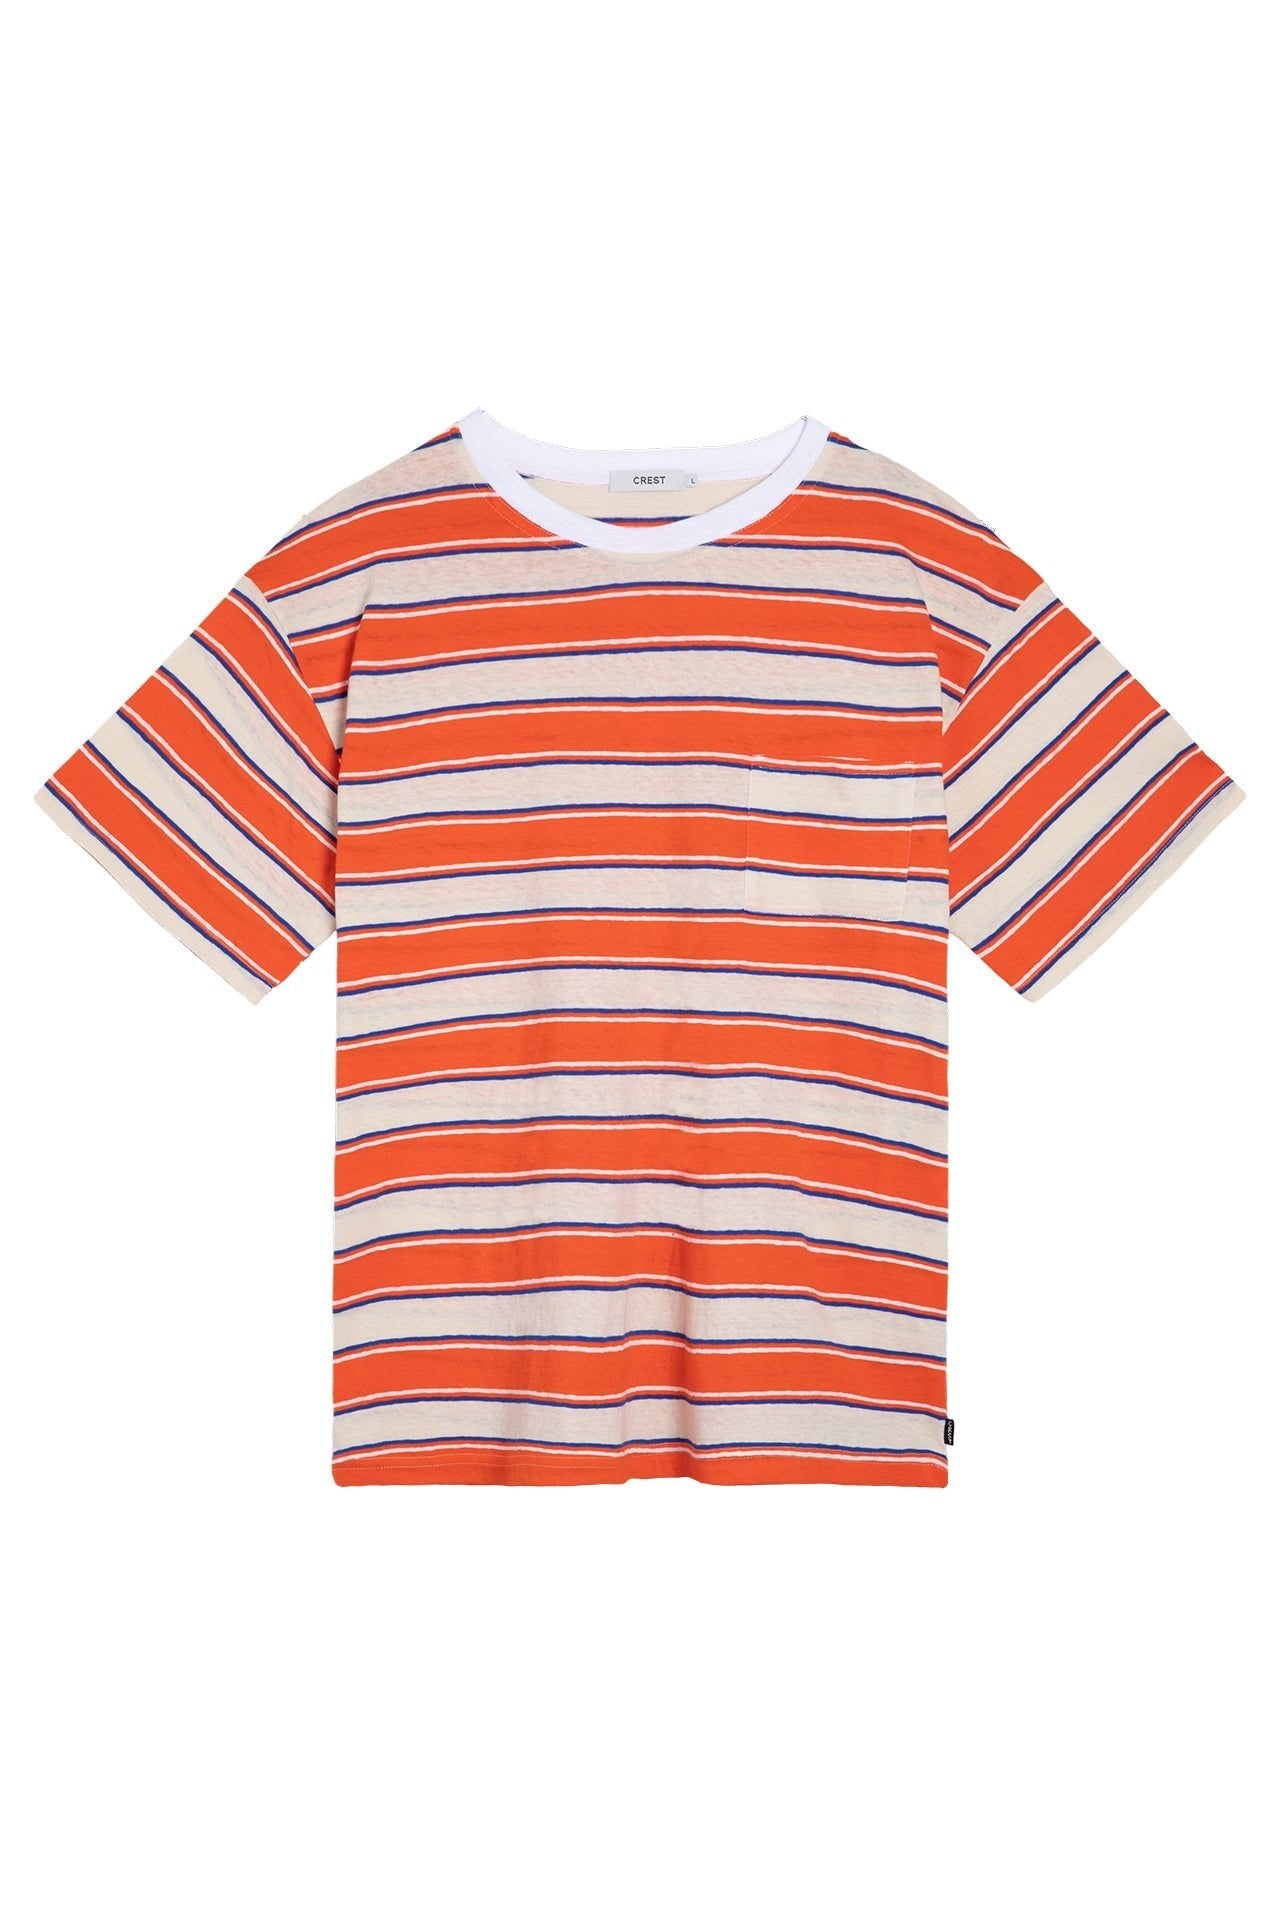 CREST - Border Short Sleeves T-Shirt | Orange Stripes